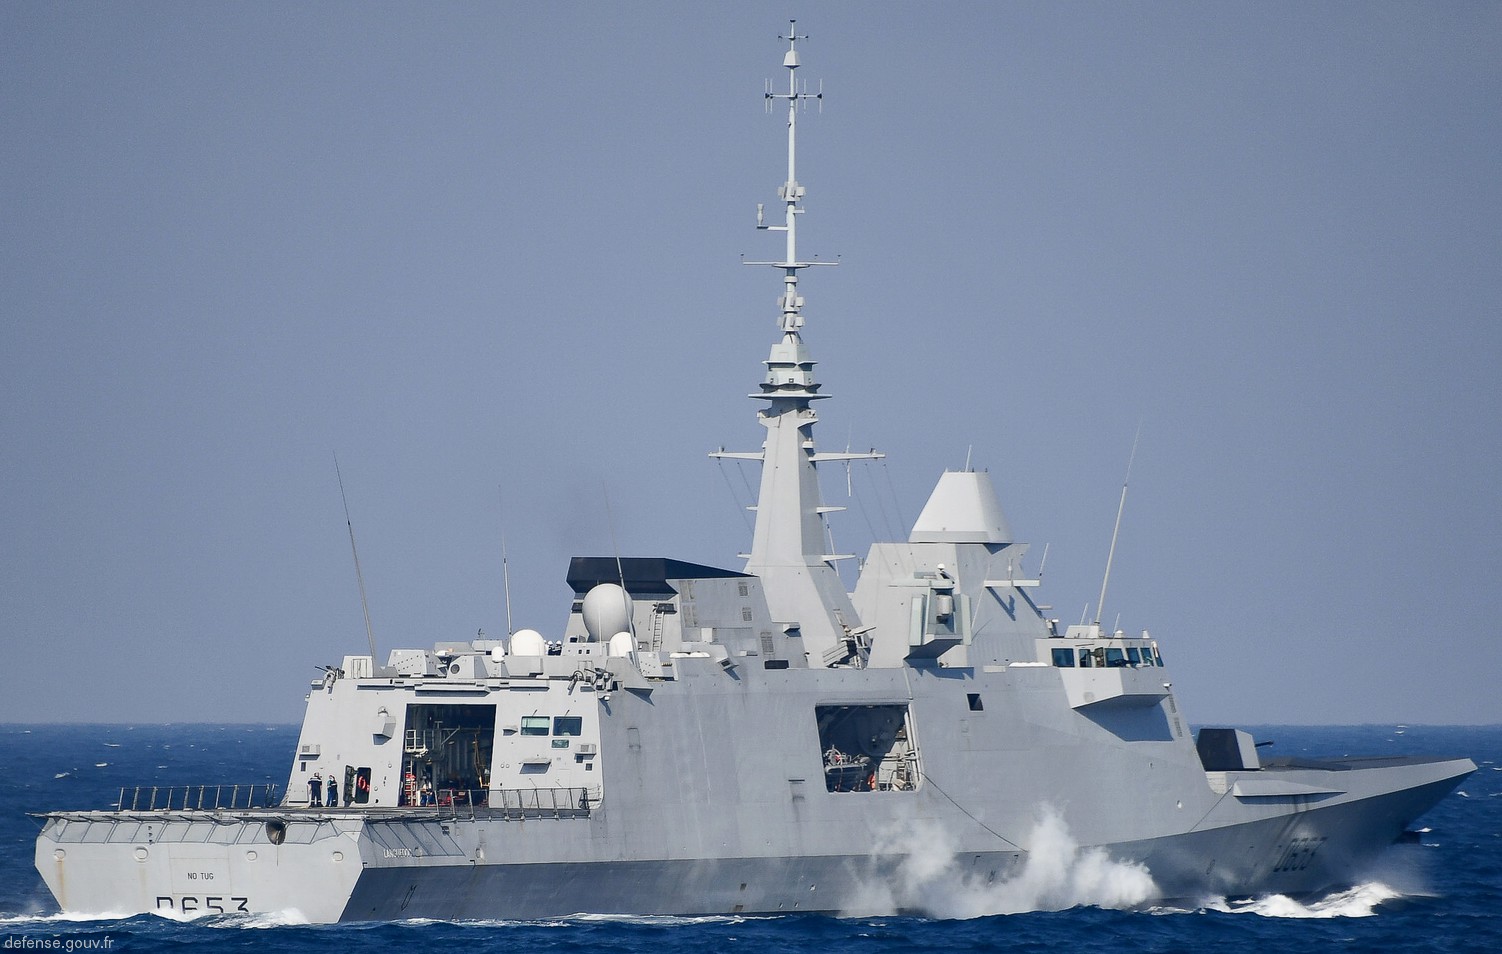 d-653 fs languedoc fremm aquitaine class frigate fregate multi purpose french navy marine nationale 17